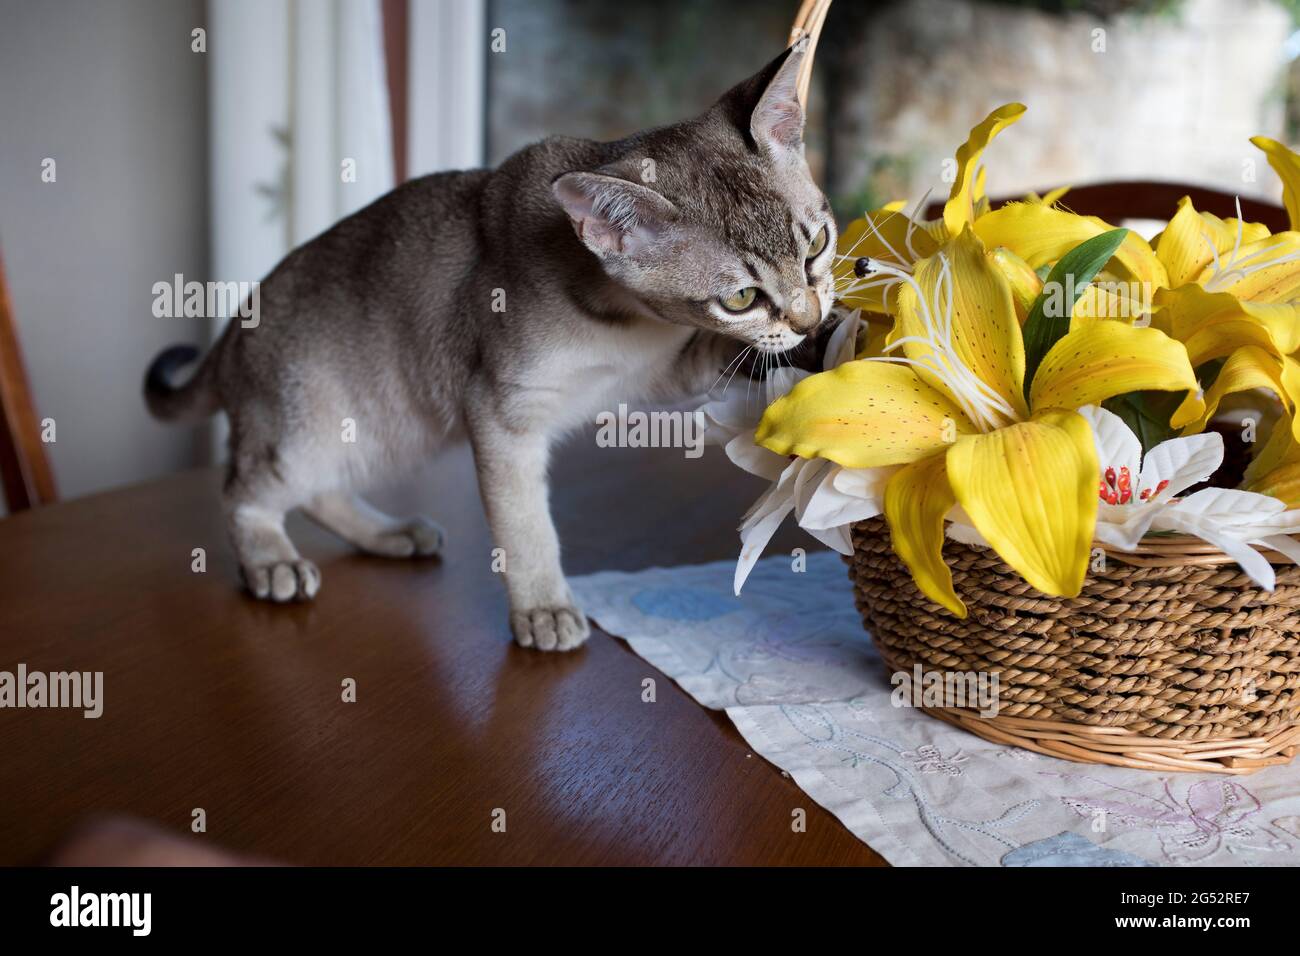 dh Kittens ASIAN CATS Burmese burmilla cross kitten playing with flowers exploring indoors explore home nobody Stock Photo